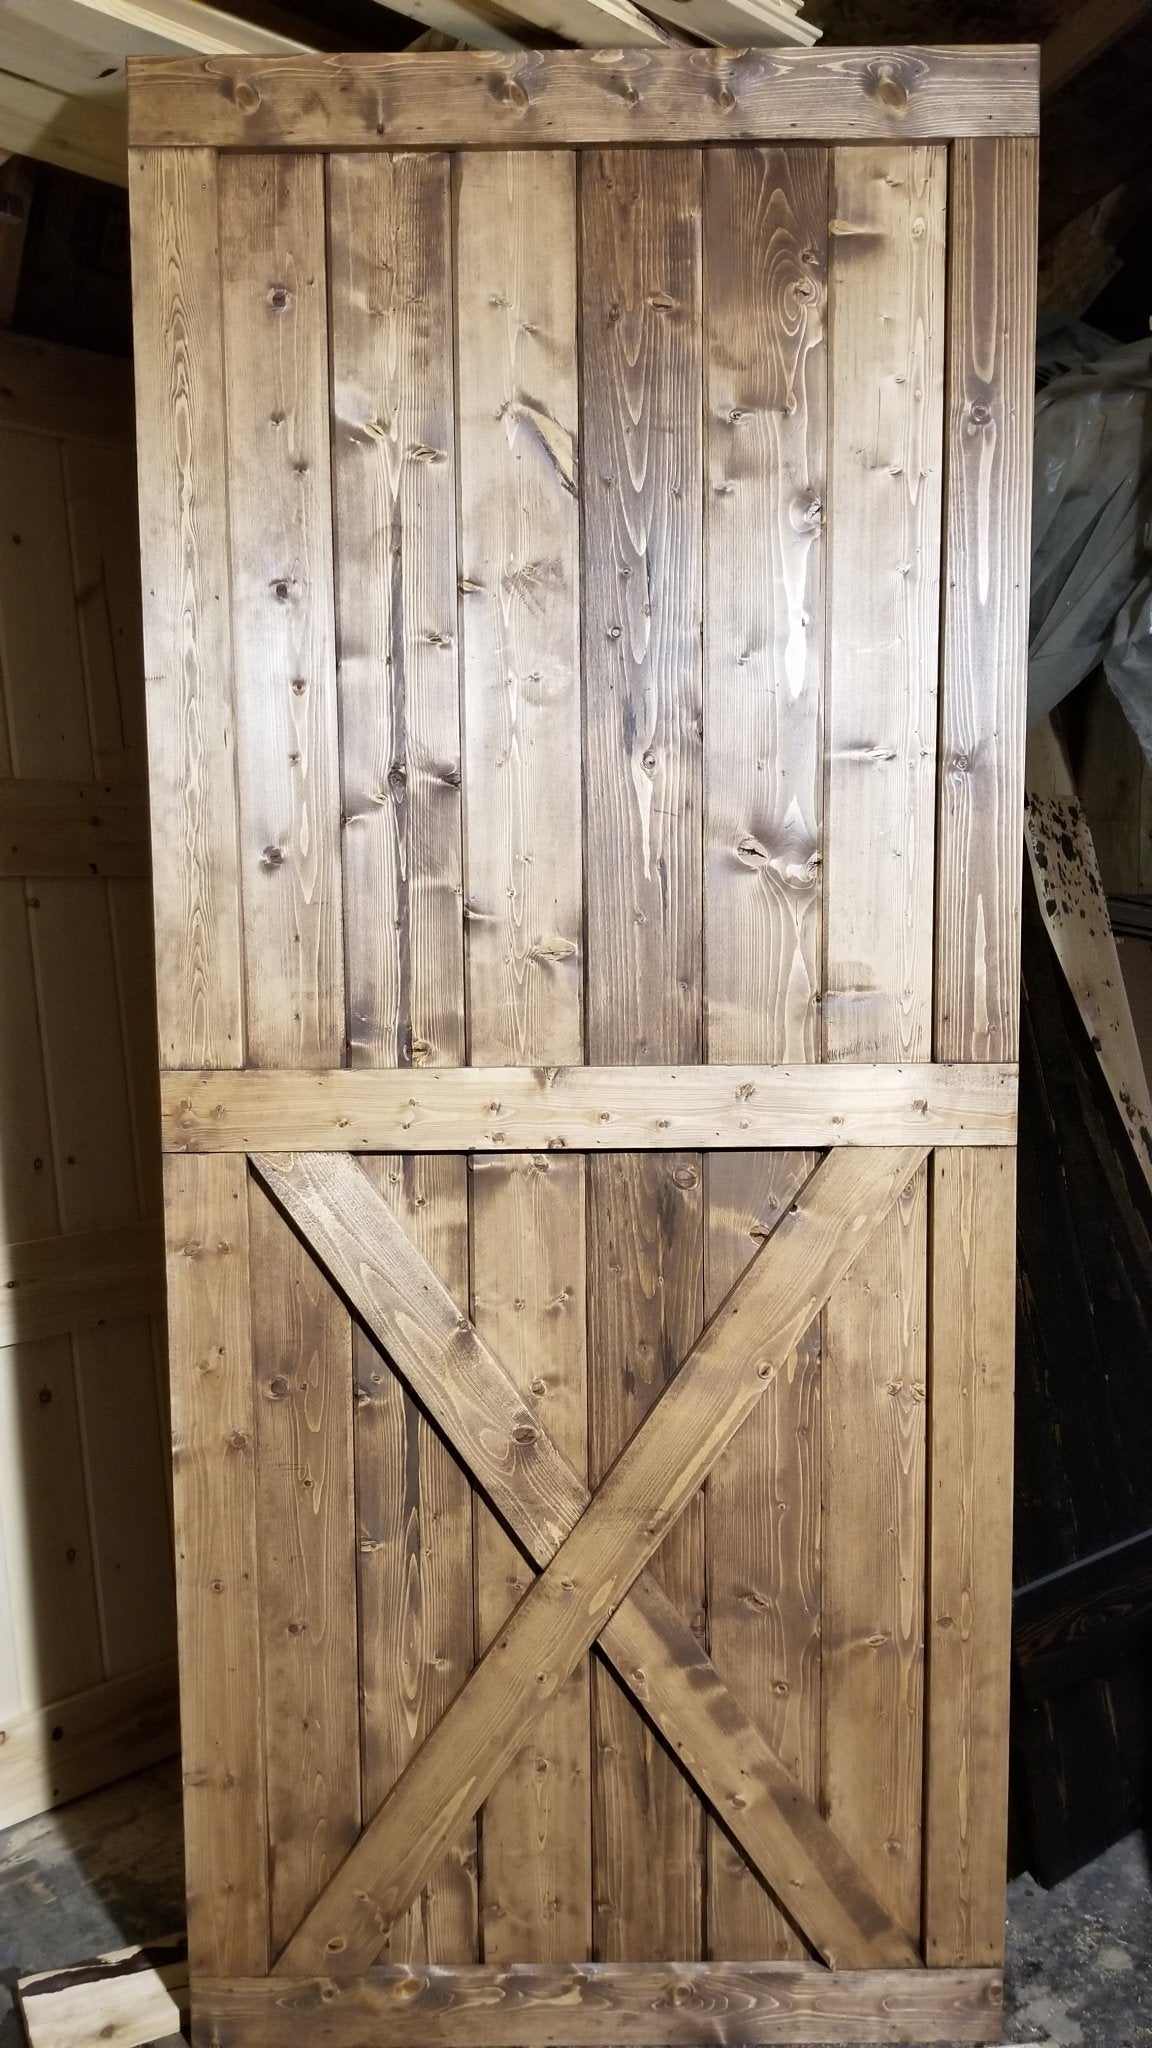 Detail view of the wooden cross on the Custom Bottom Brace Interior Barn Door